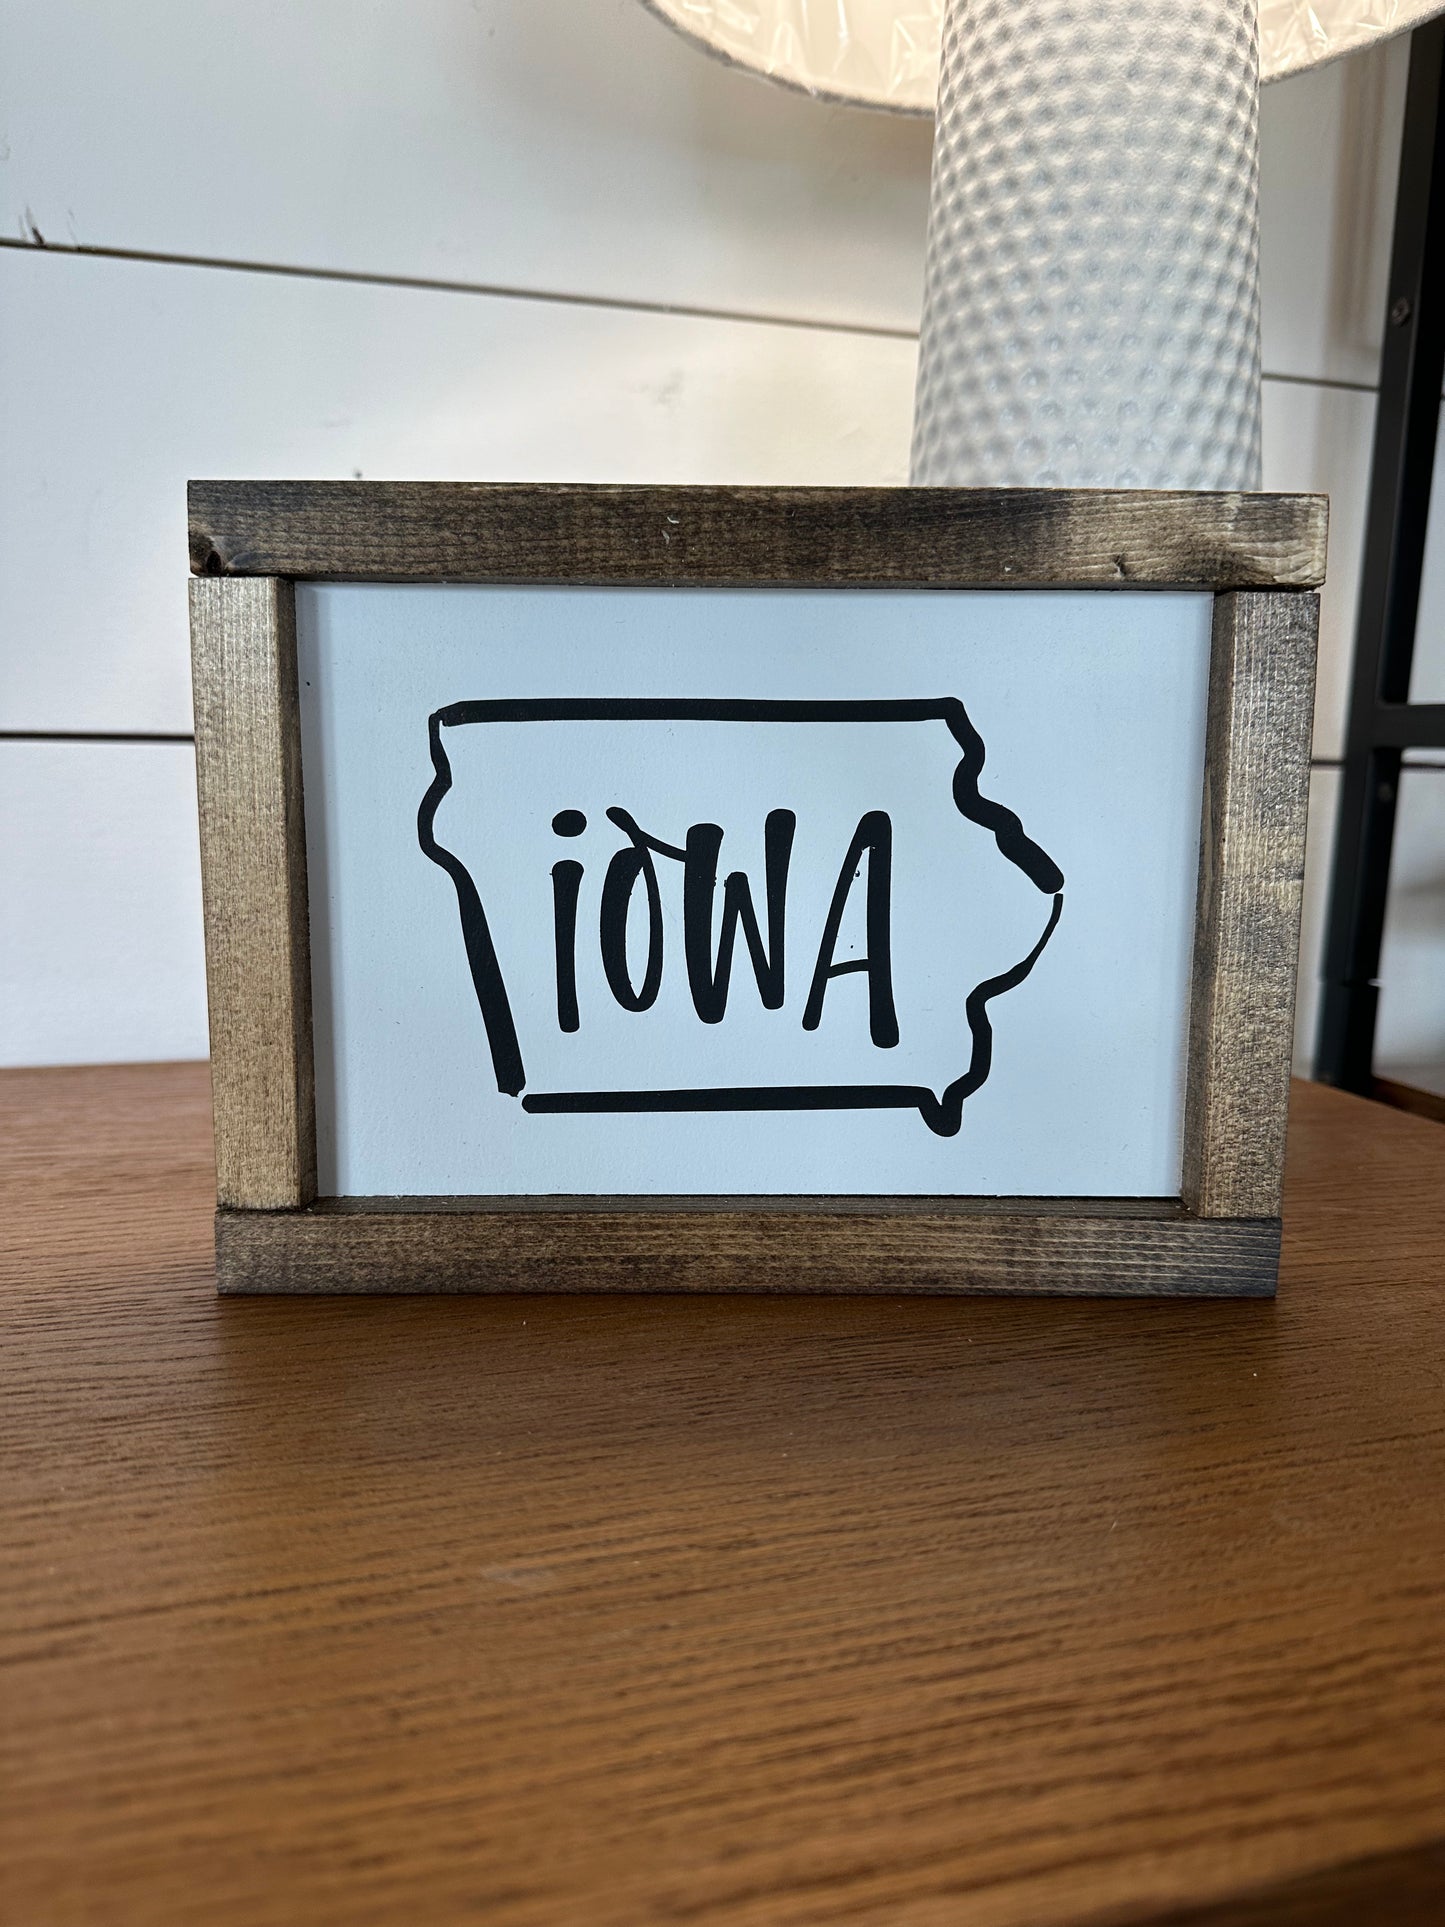 Iowa Sign